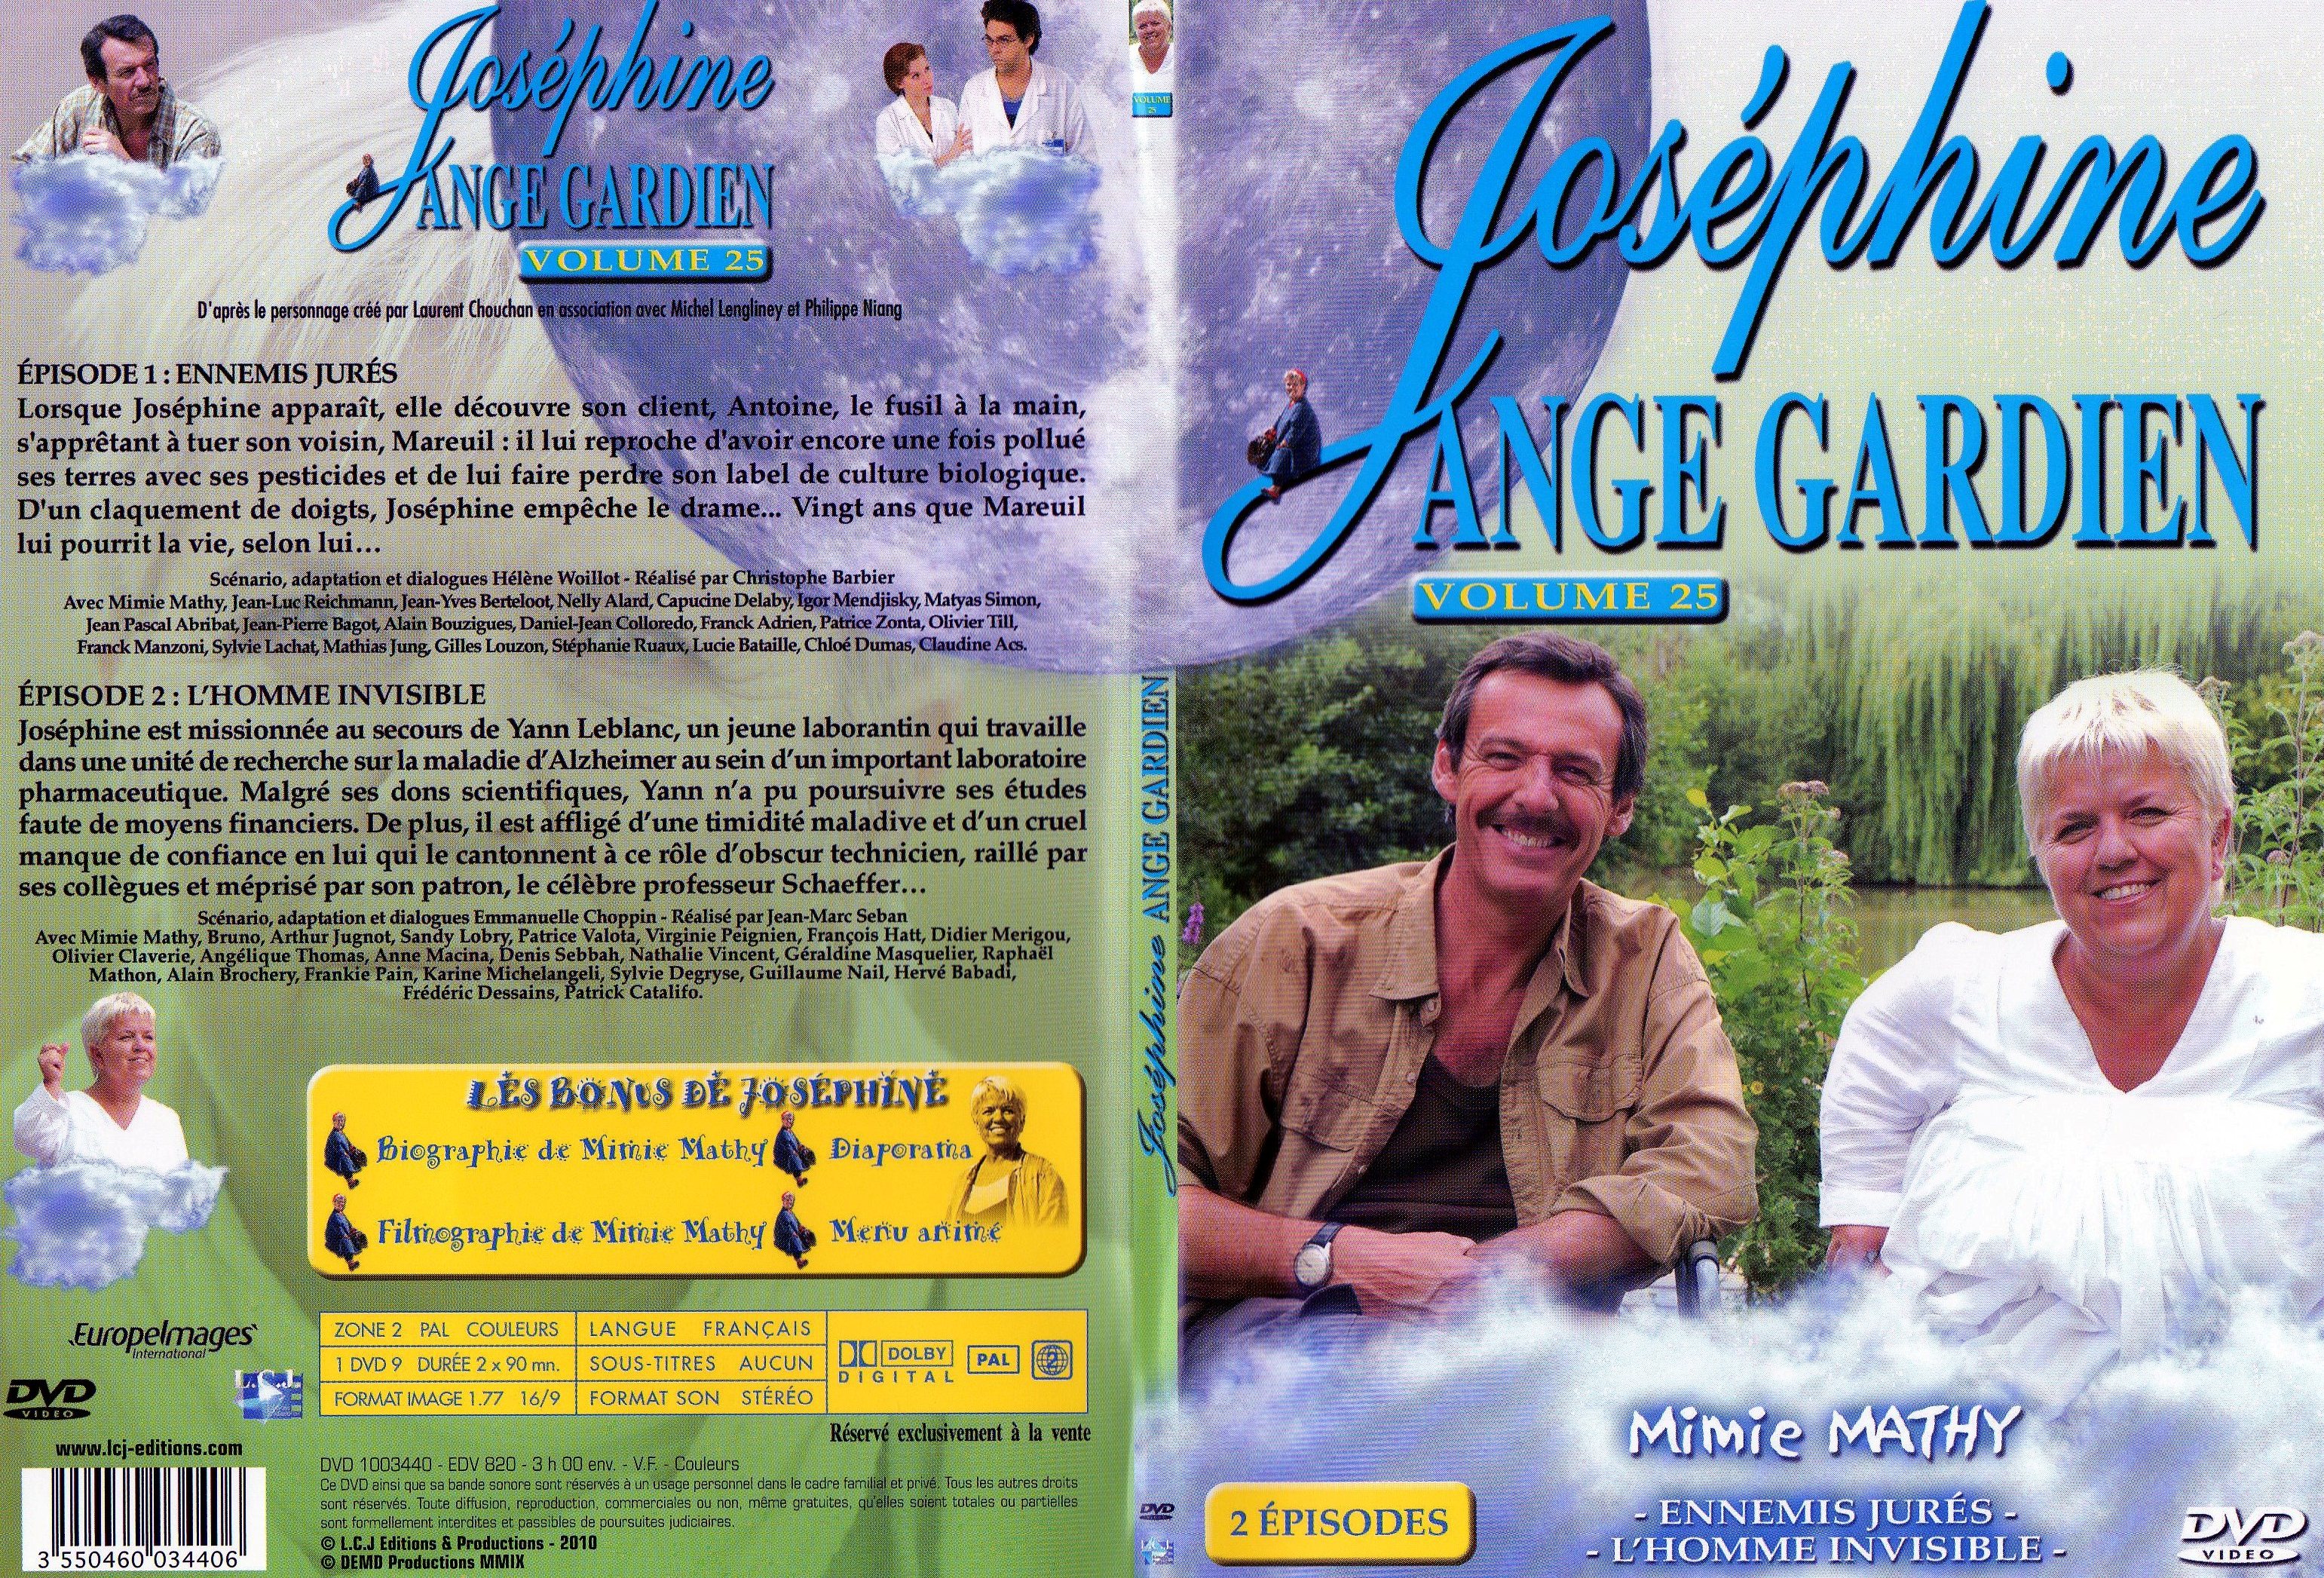 Jaquette DVD Josphine Ange Gardien saison 5 DVD 25